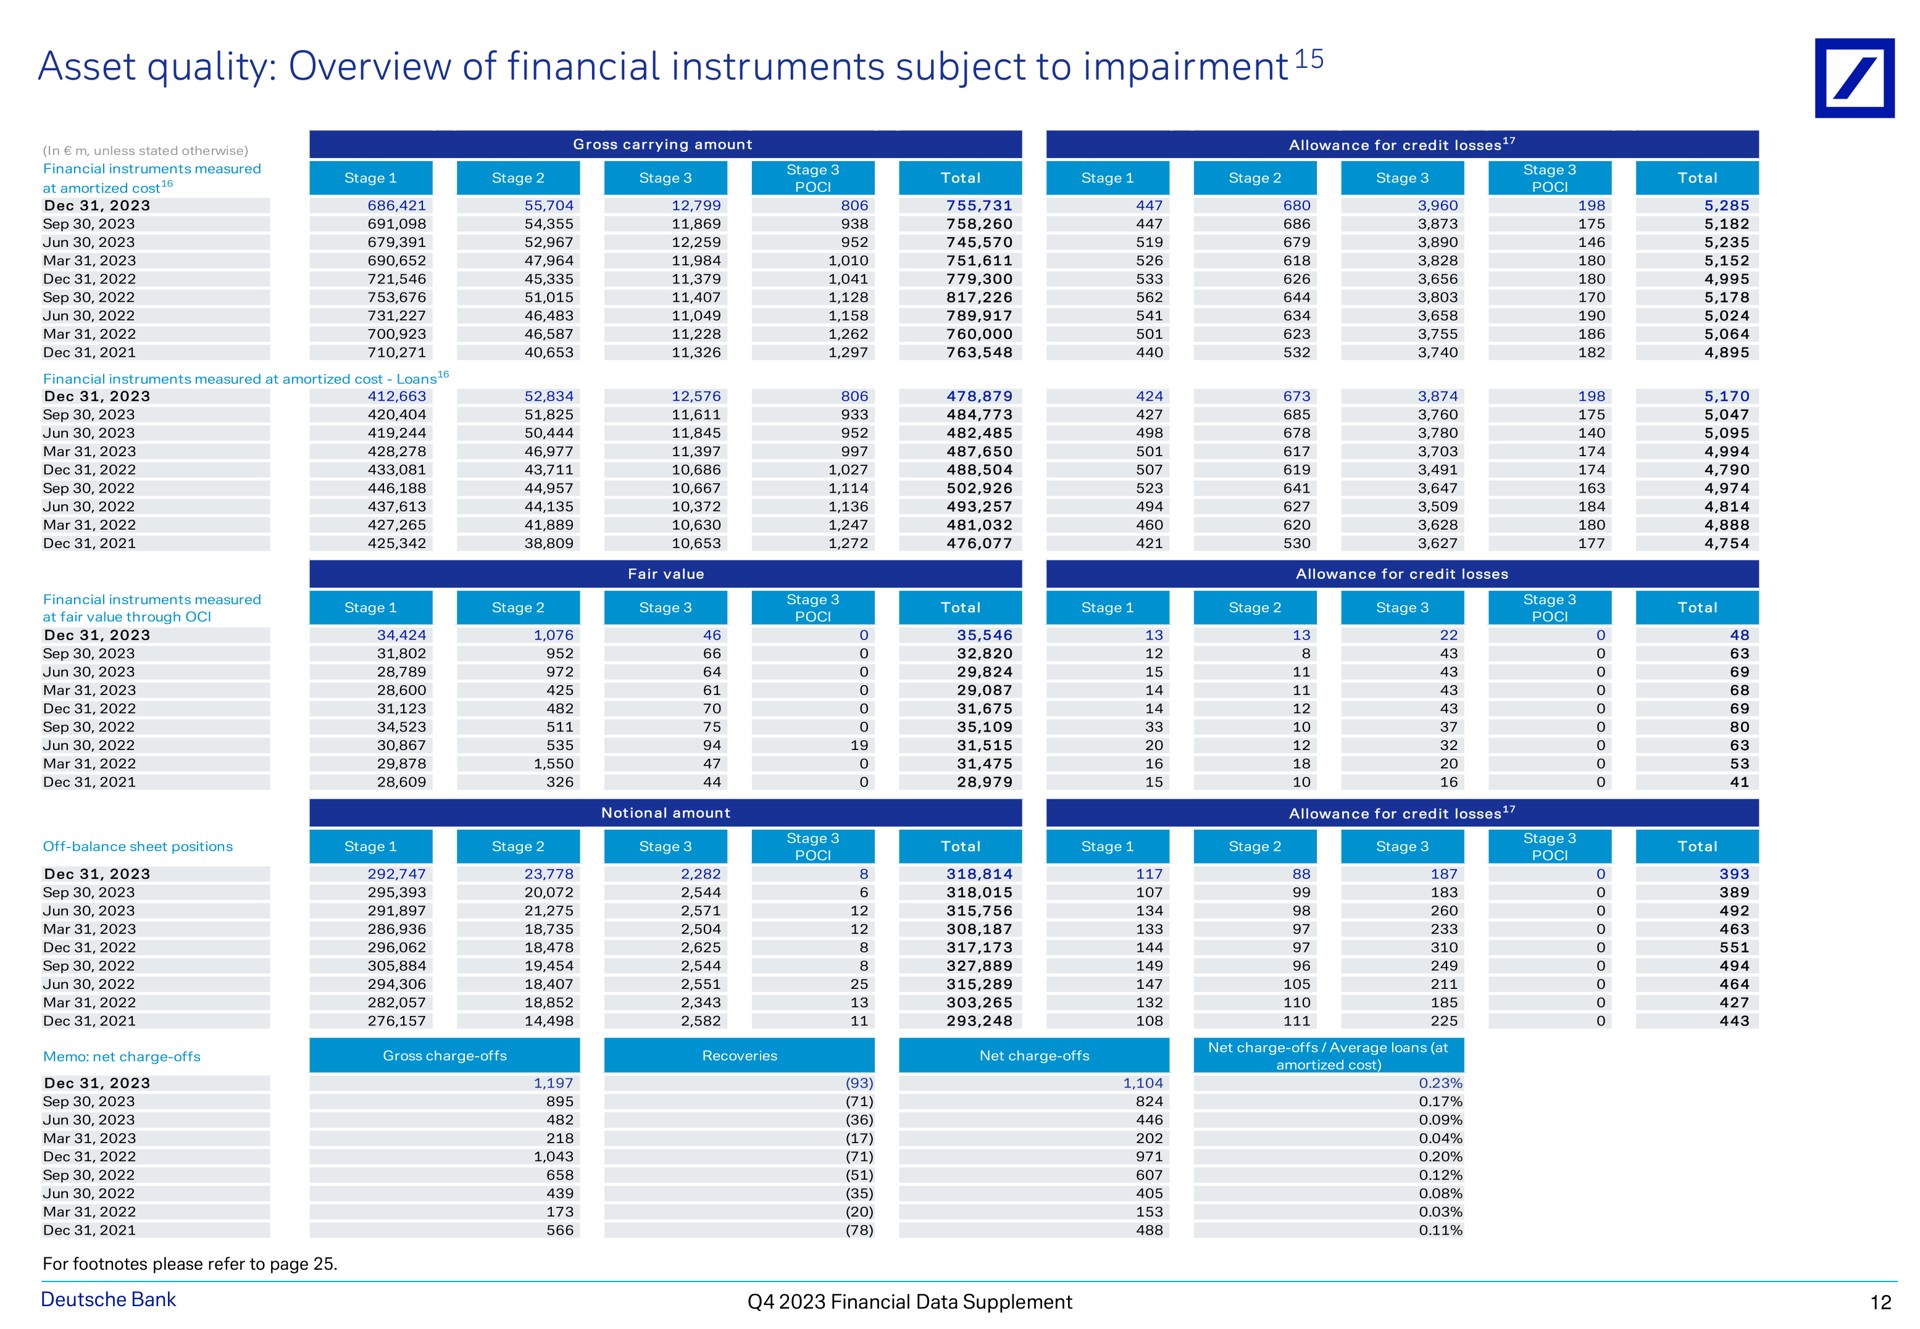 asset quality overview of financial instruments subject to impairment bank data supplement | Deutsche Bank